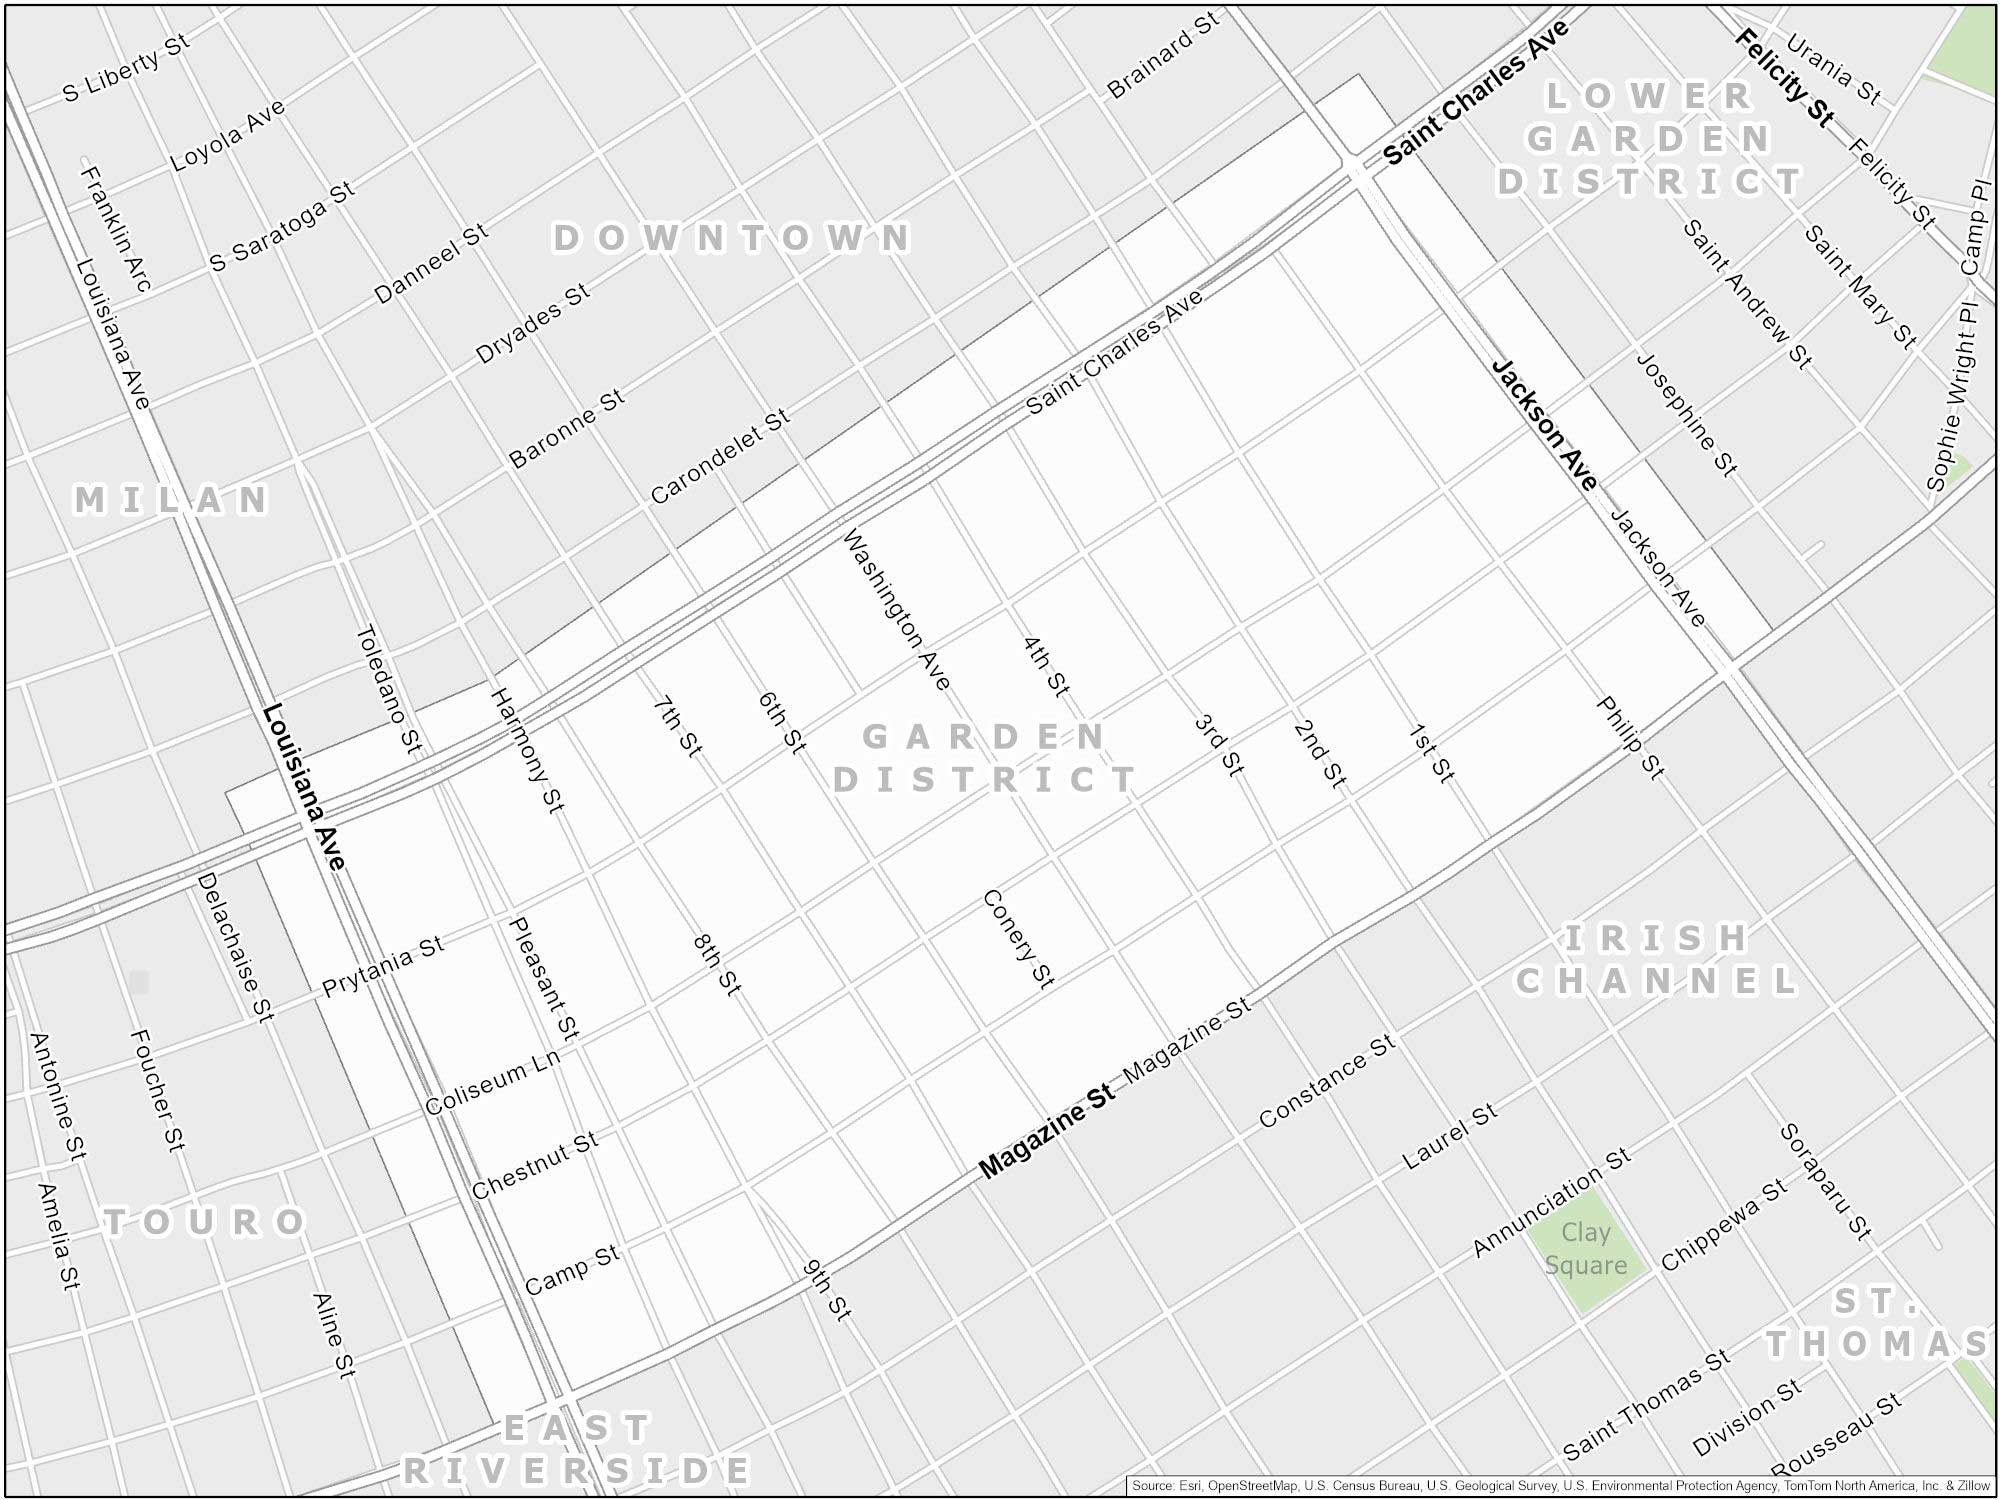 New Orleans Garden District Map